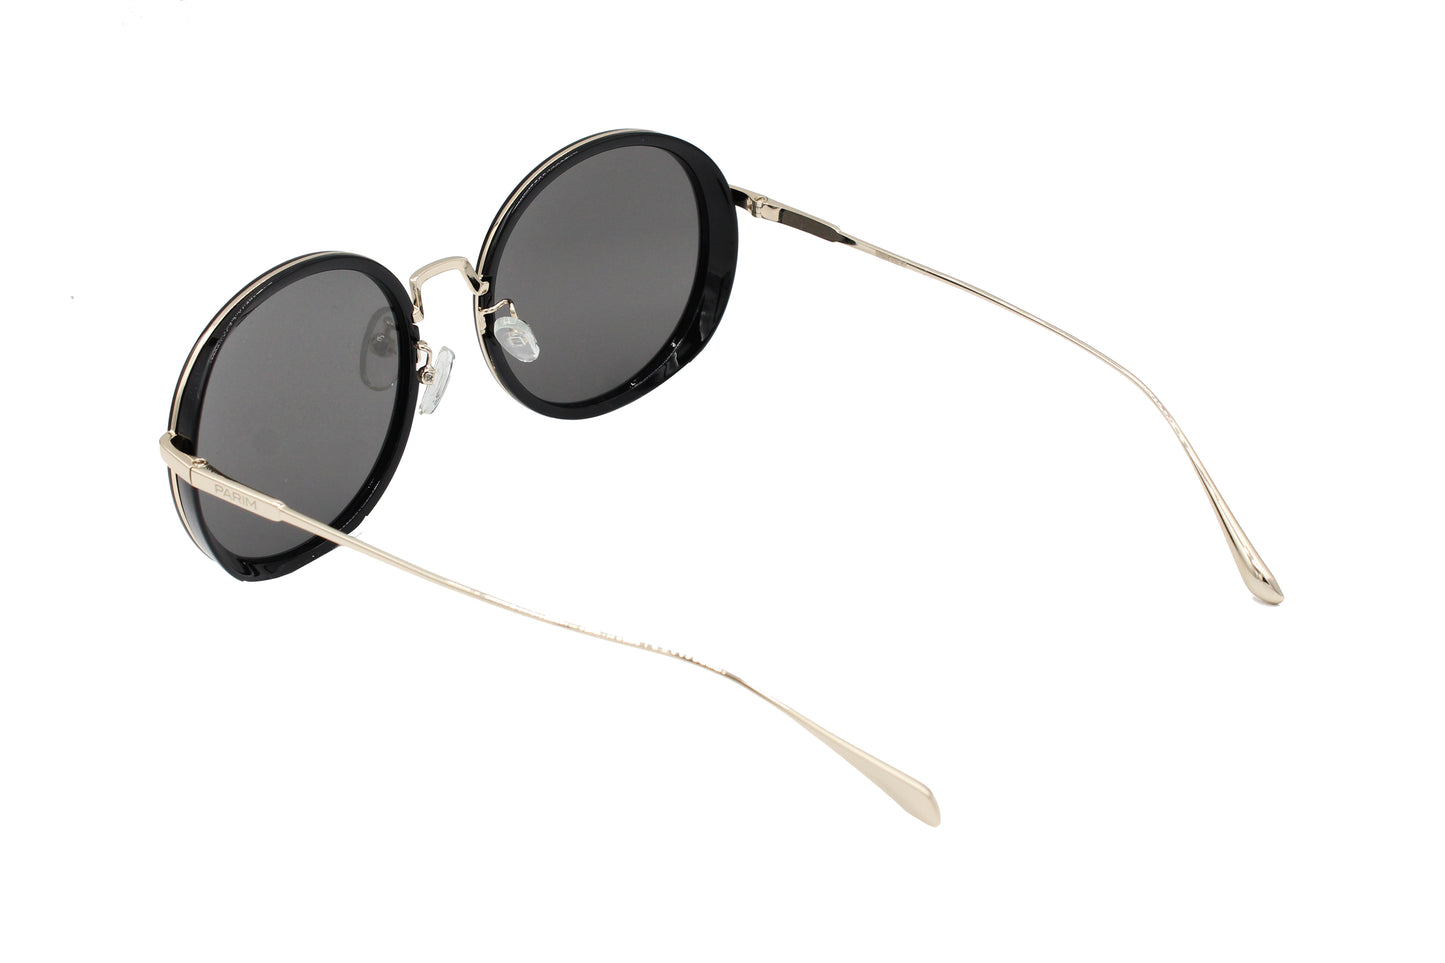 NS Deluxe - 11038 - Black - Sunglasses